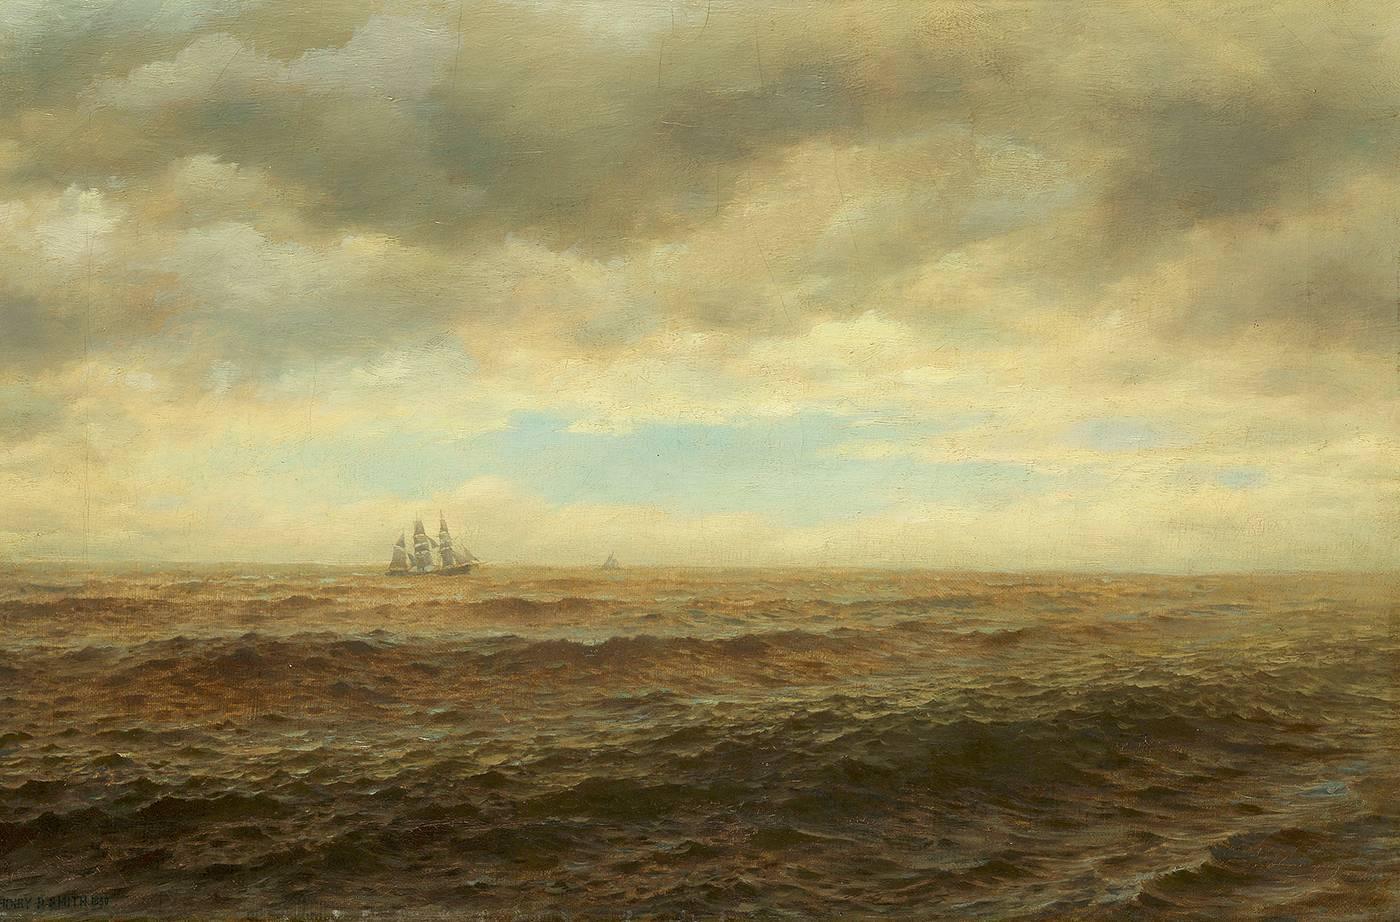 Henry Pember Smith Landscape Painting - Sailing Ship on the Horizon